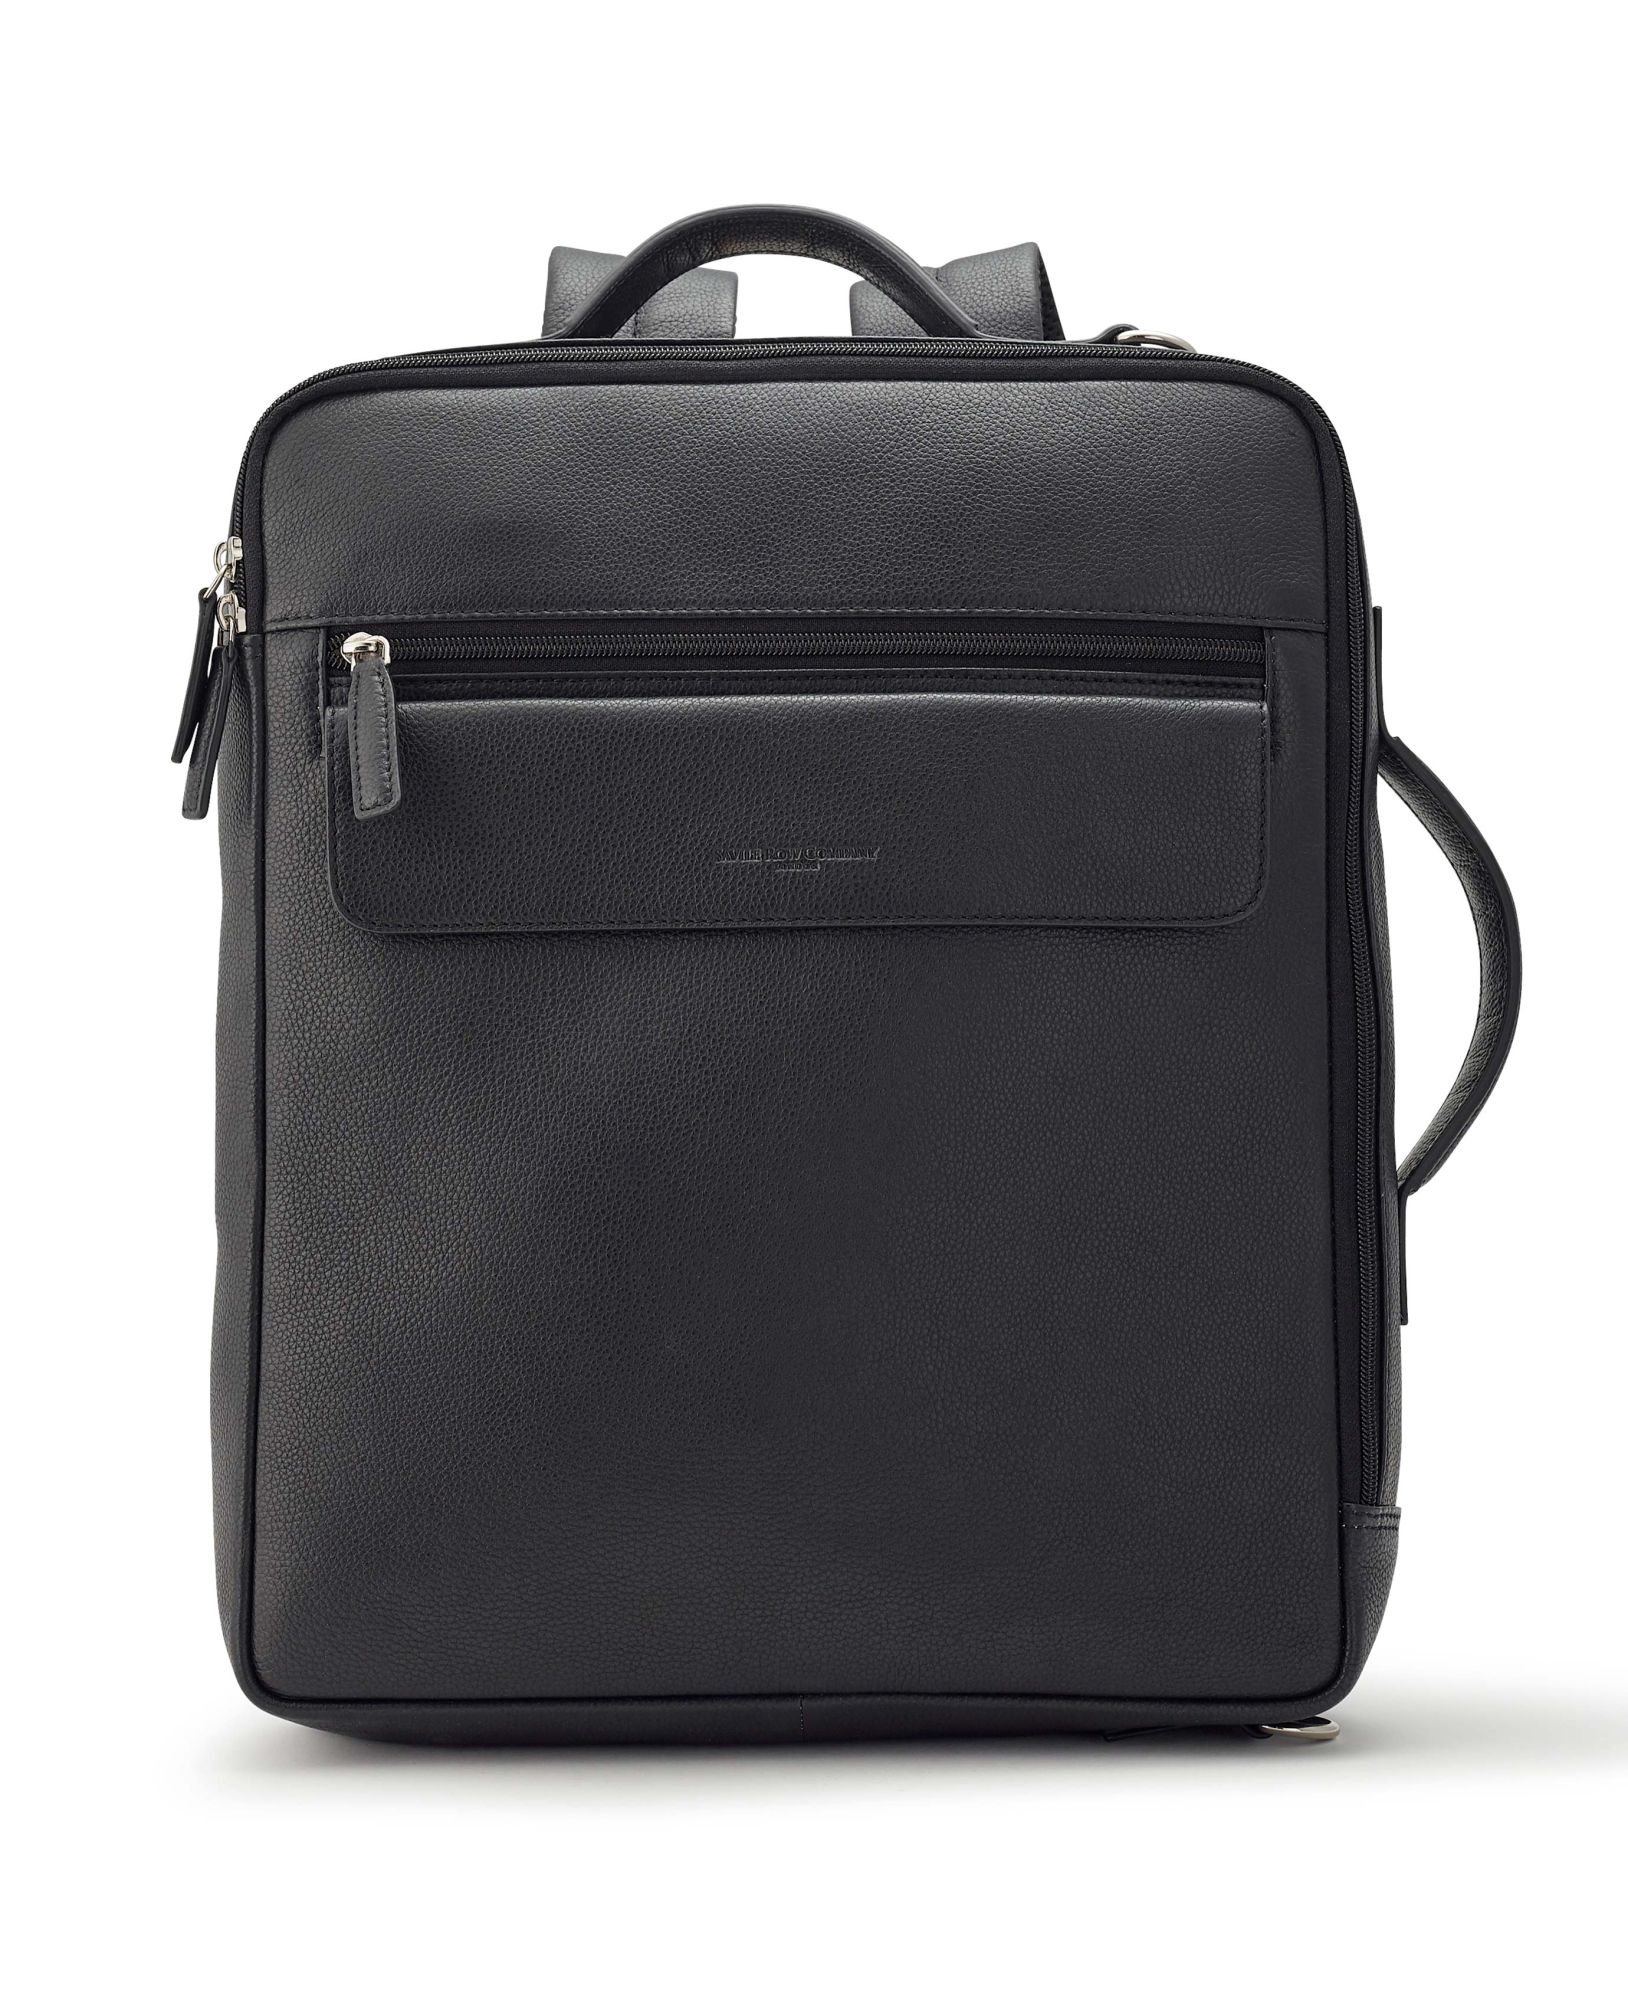 Image of Black Leather Backpack